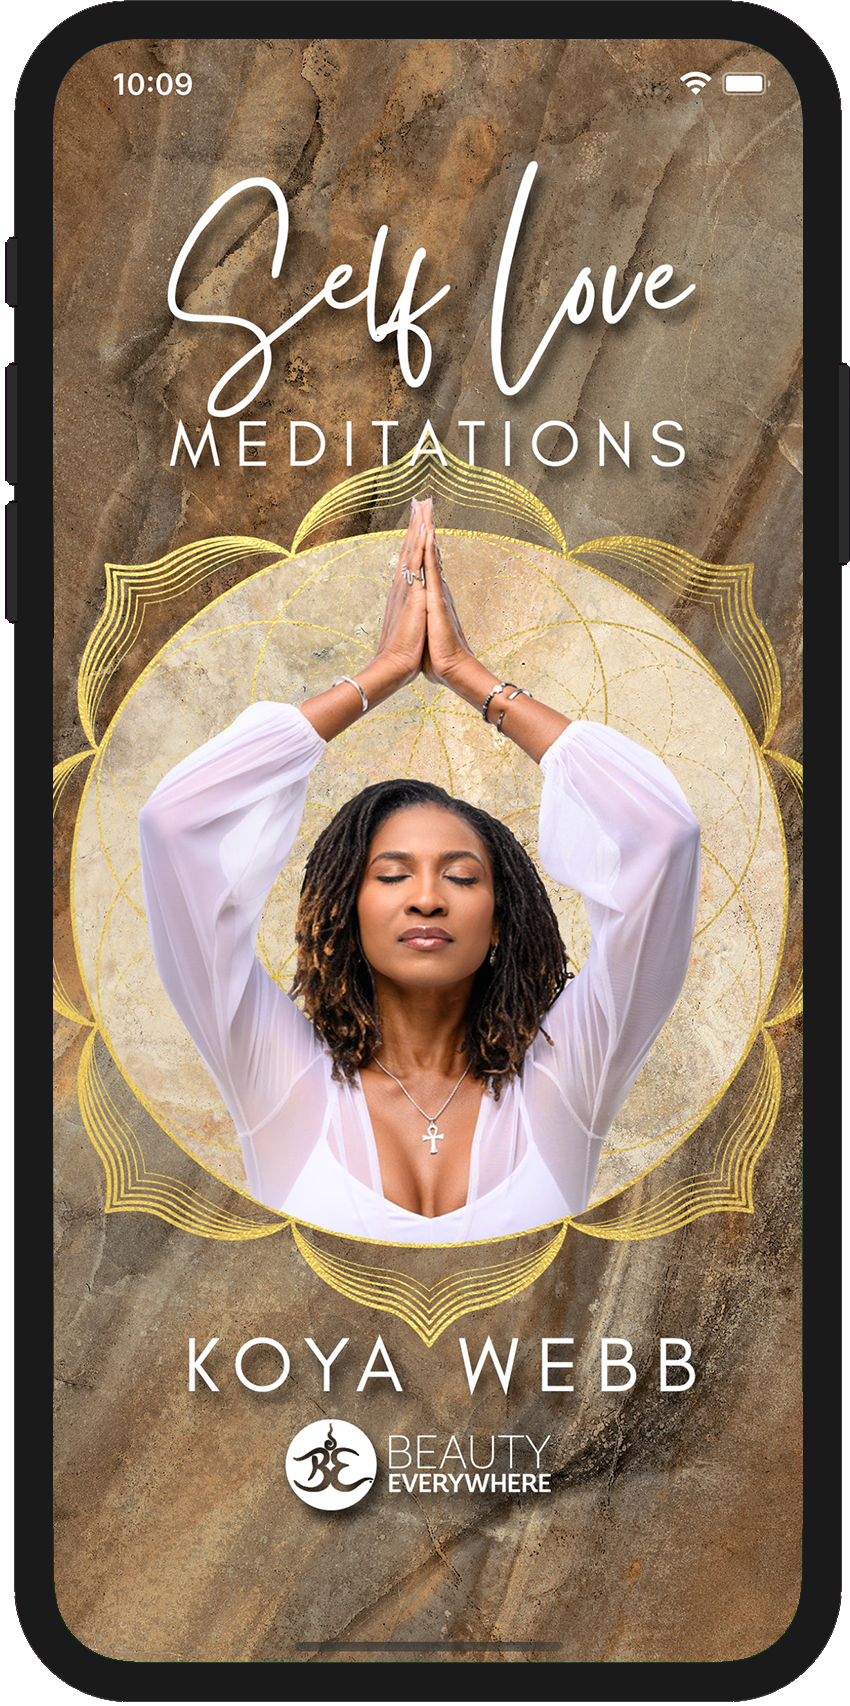 Self Love Meditations by Koya Webb by Koya Webb